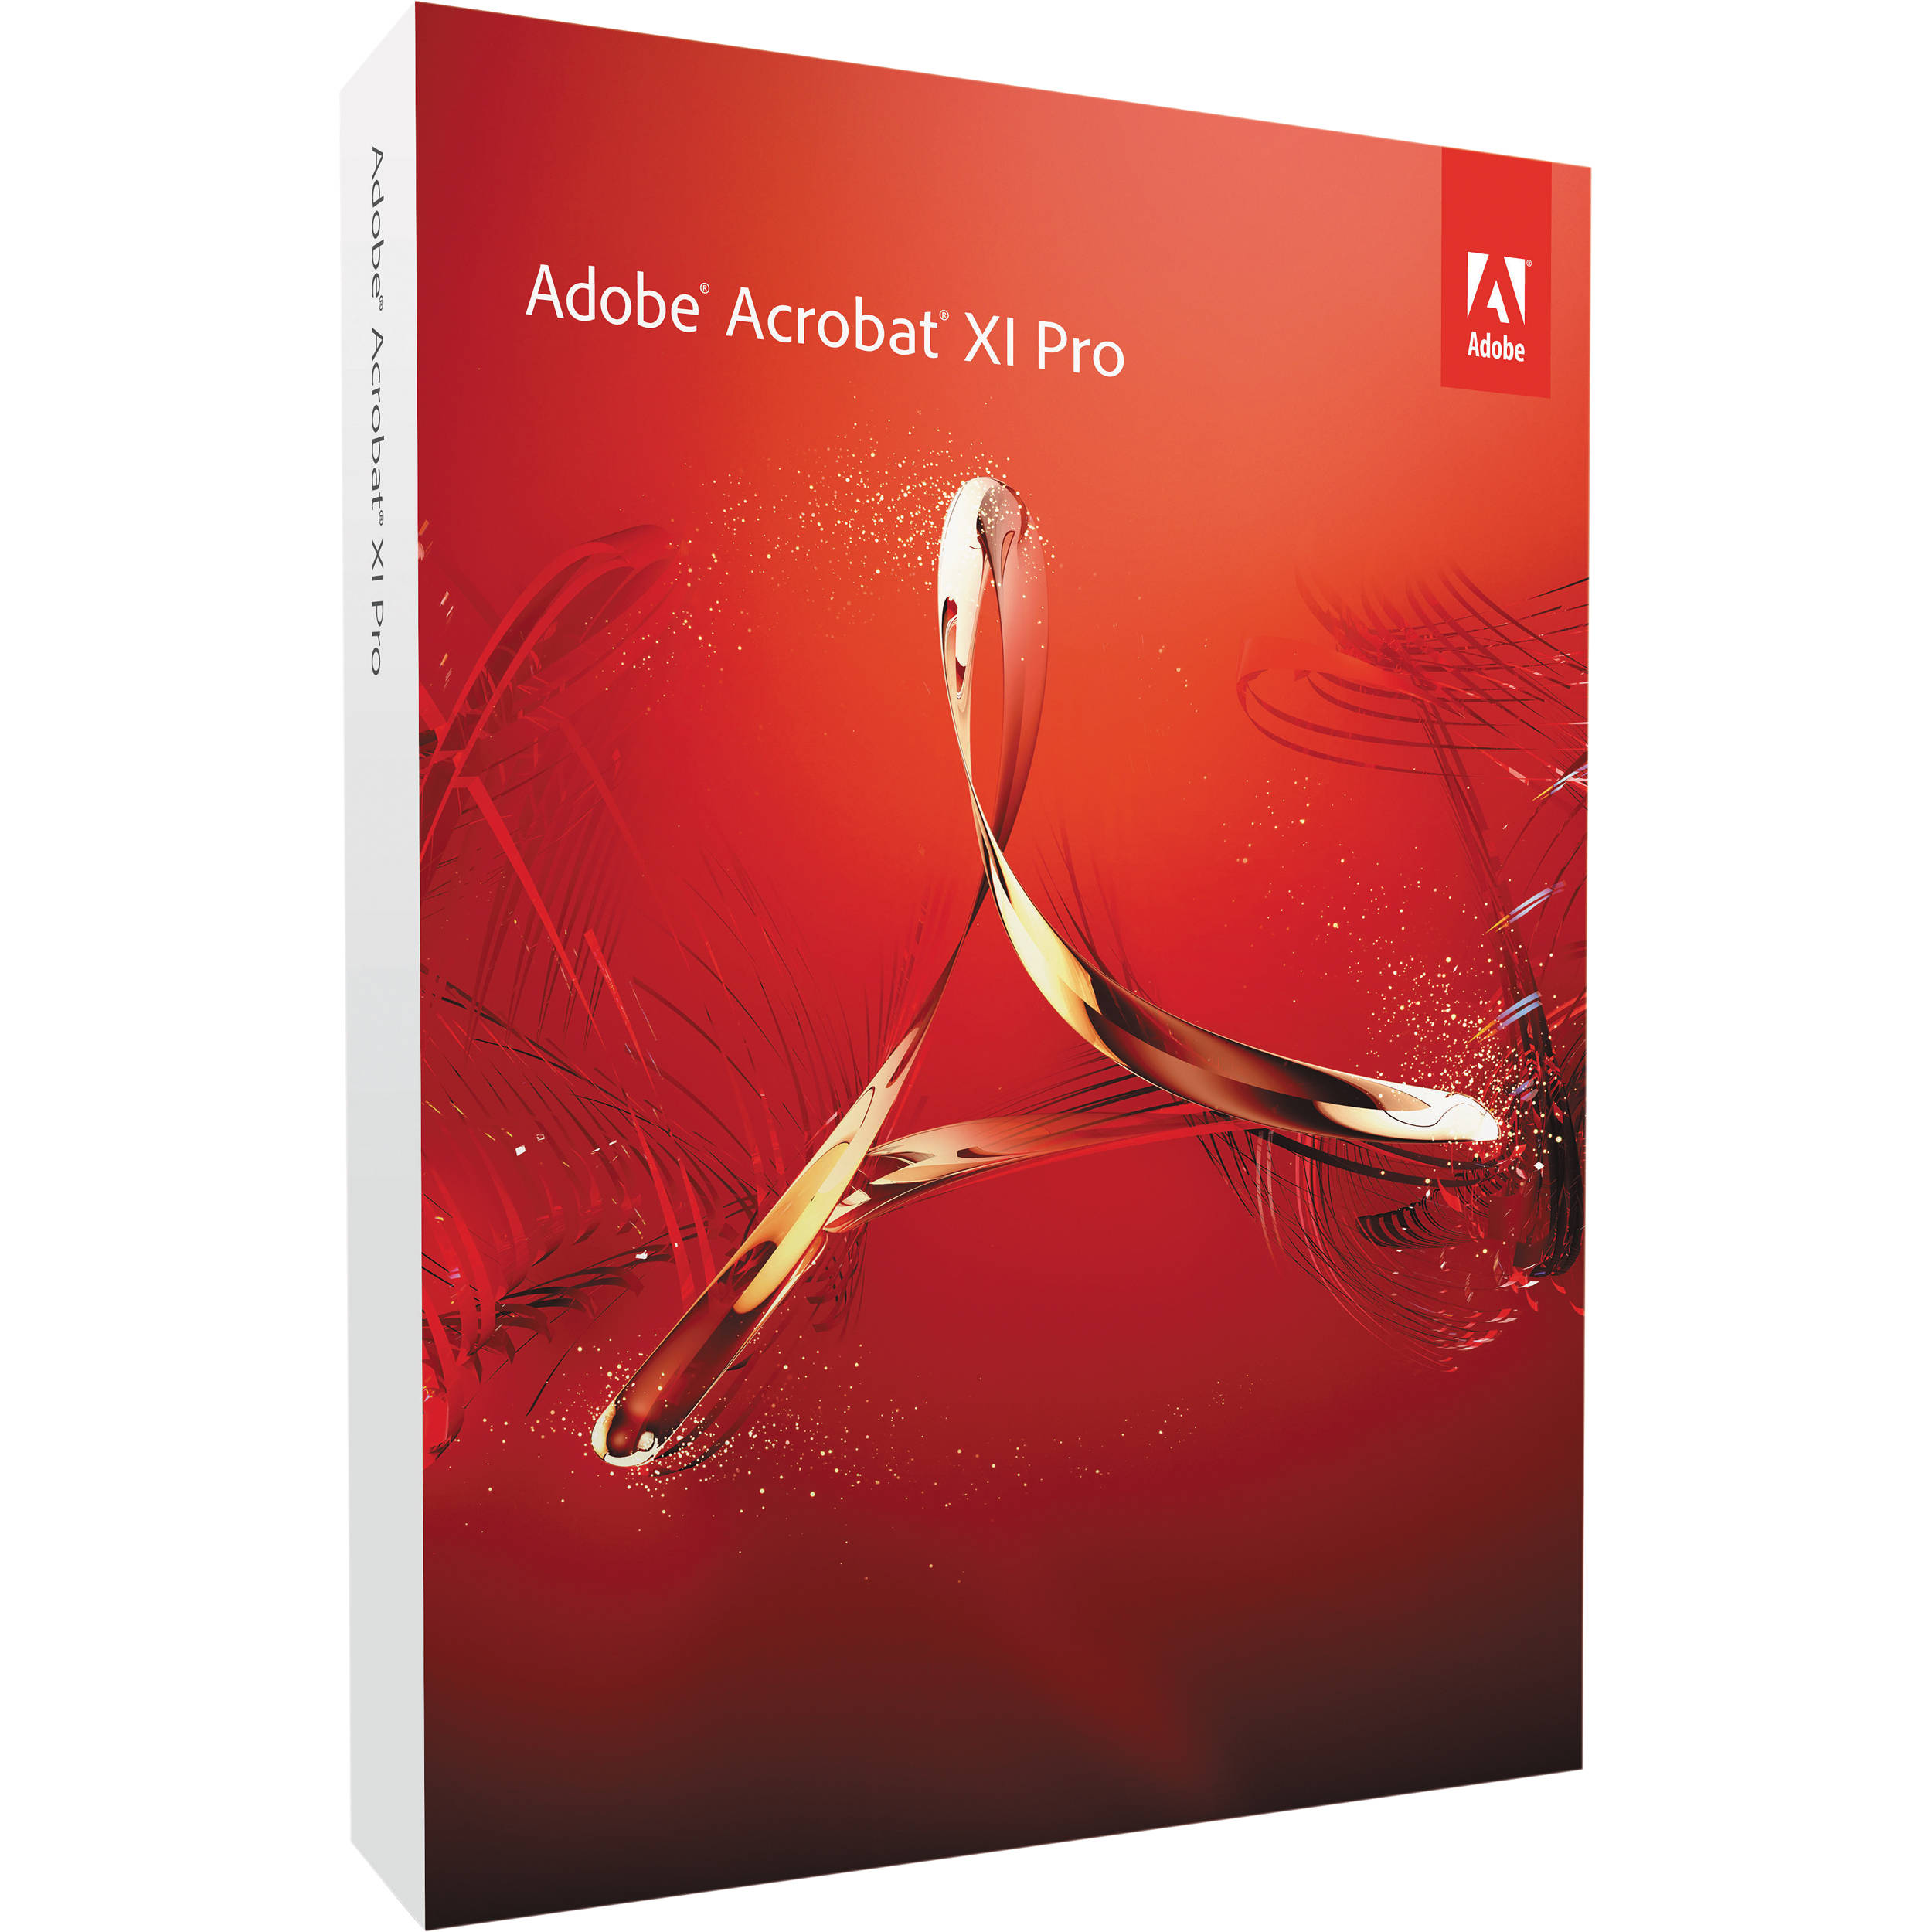 Adobe acrobat xi pro full version for mac